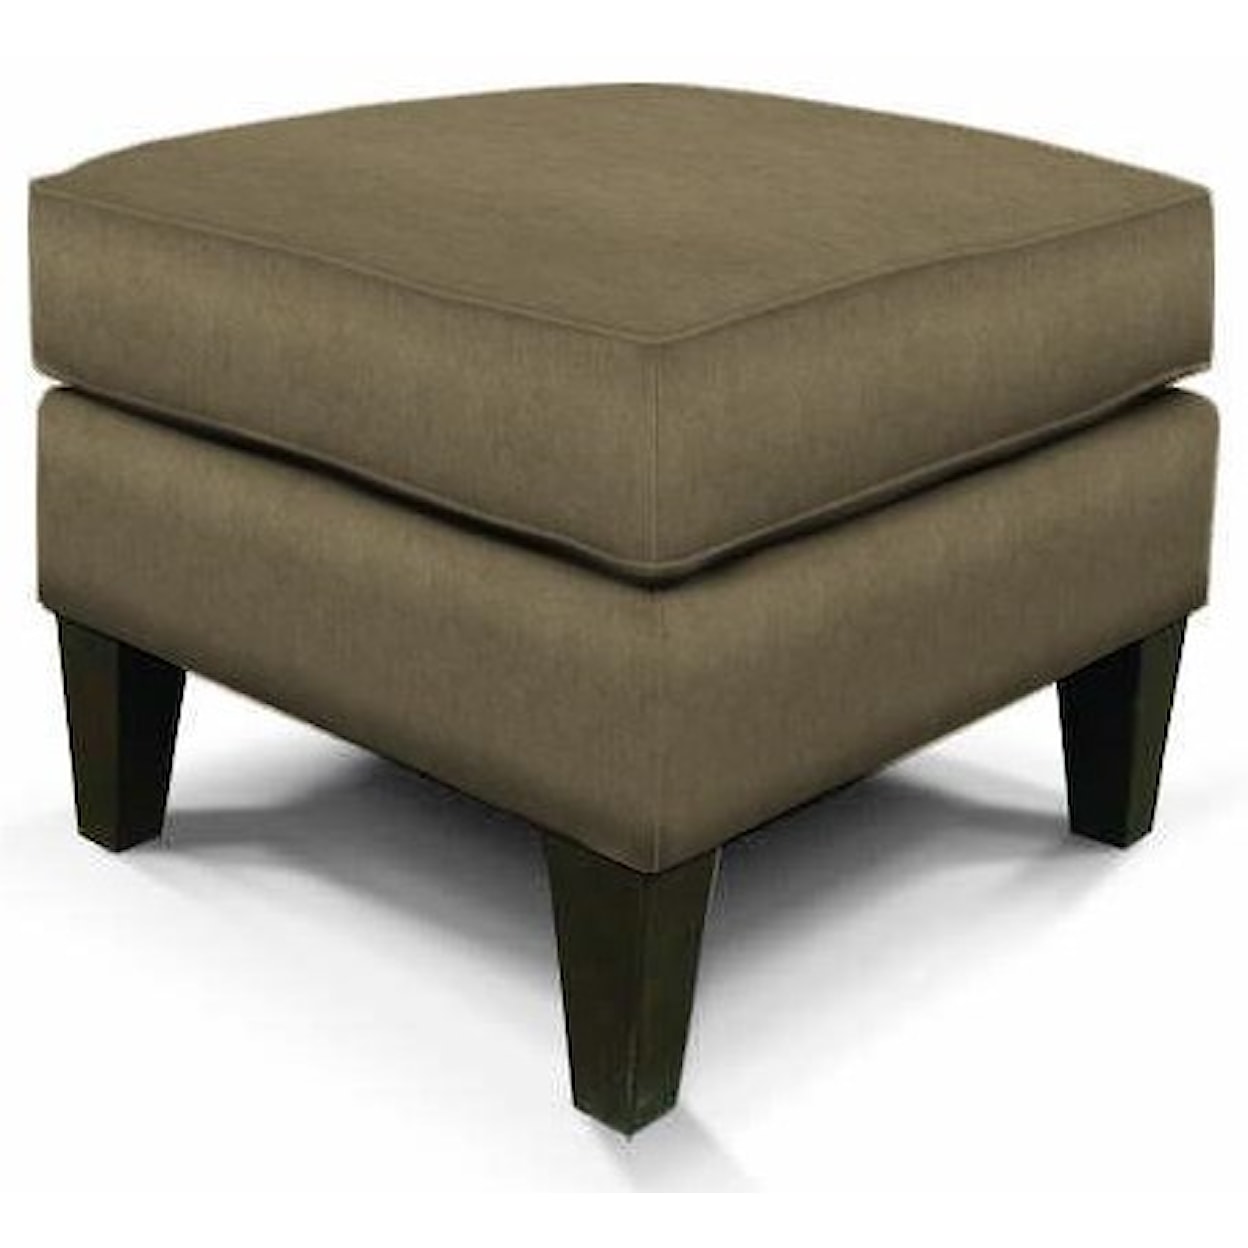 England 6200/LS Series Upholstered Ottoman